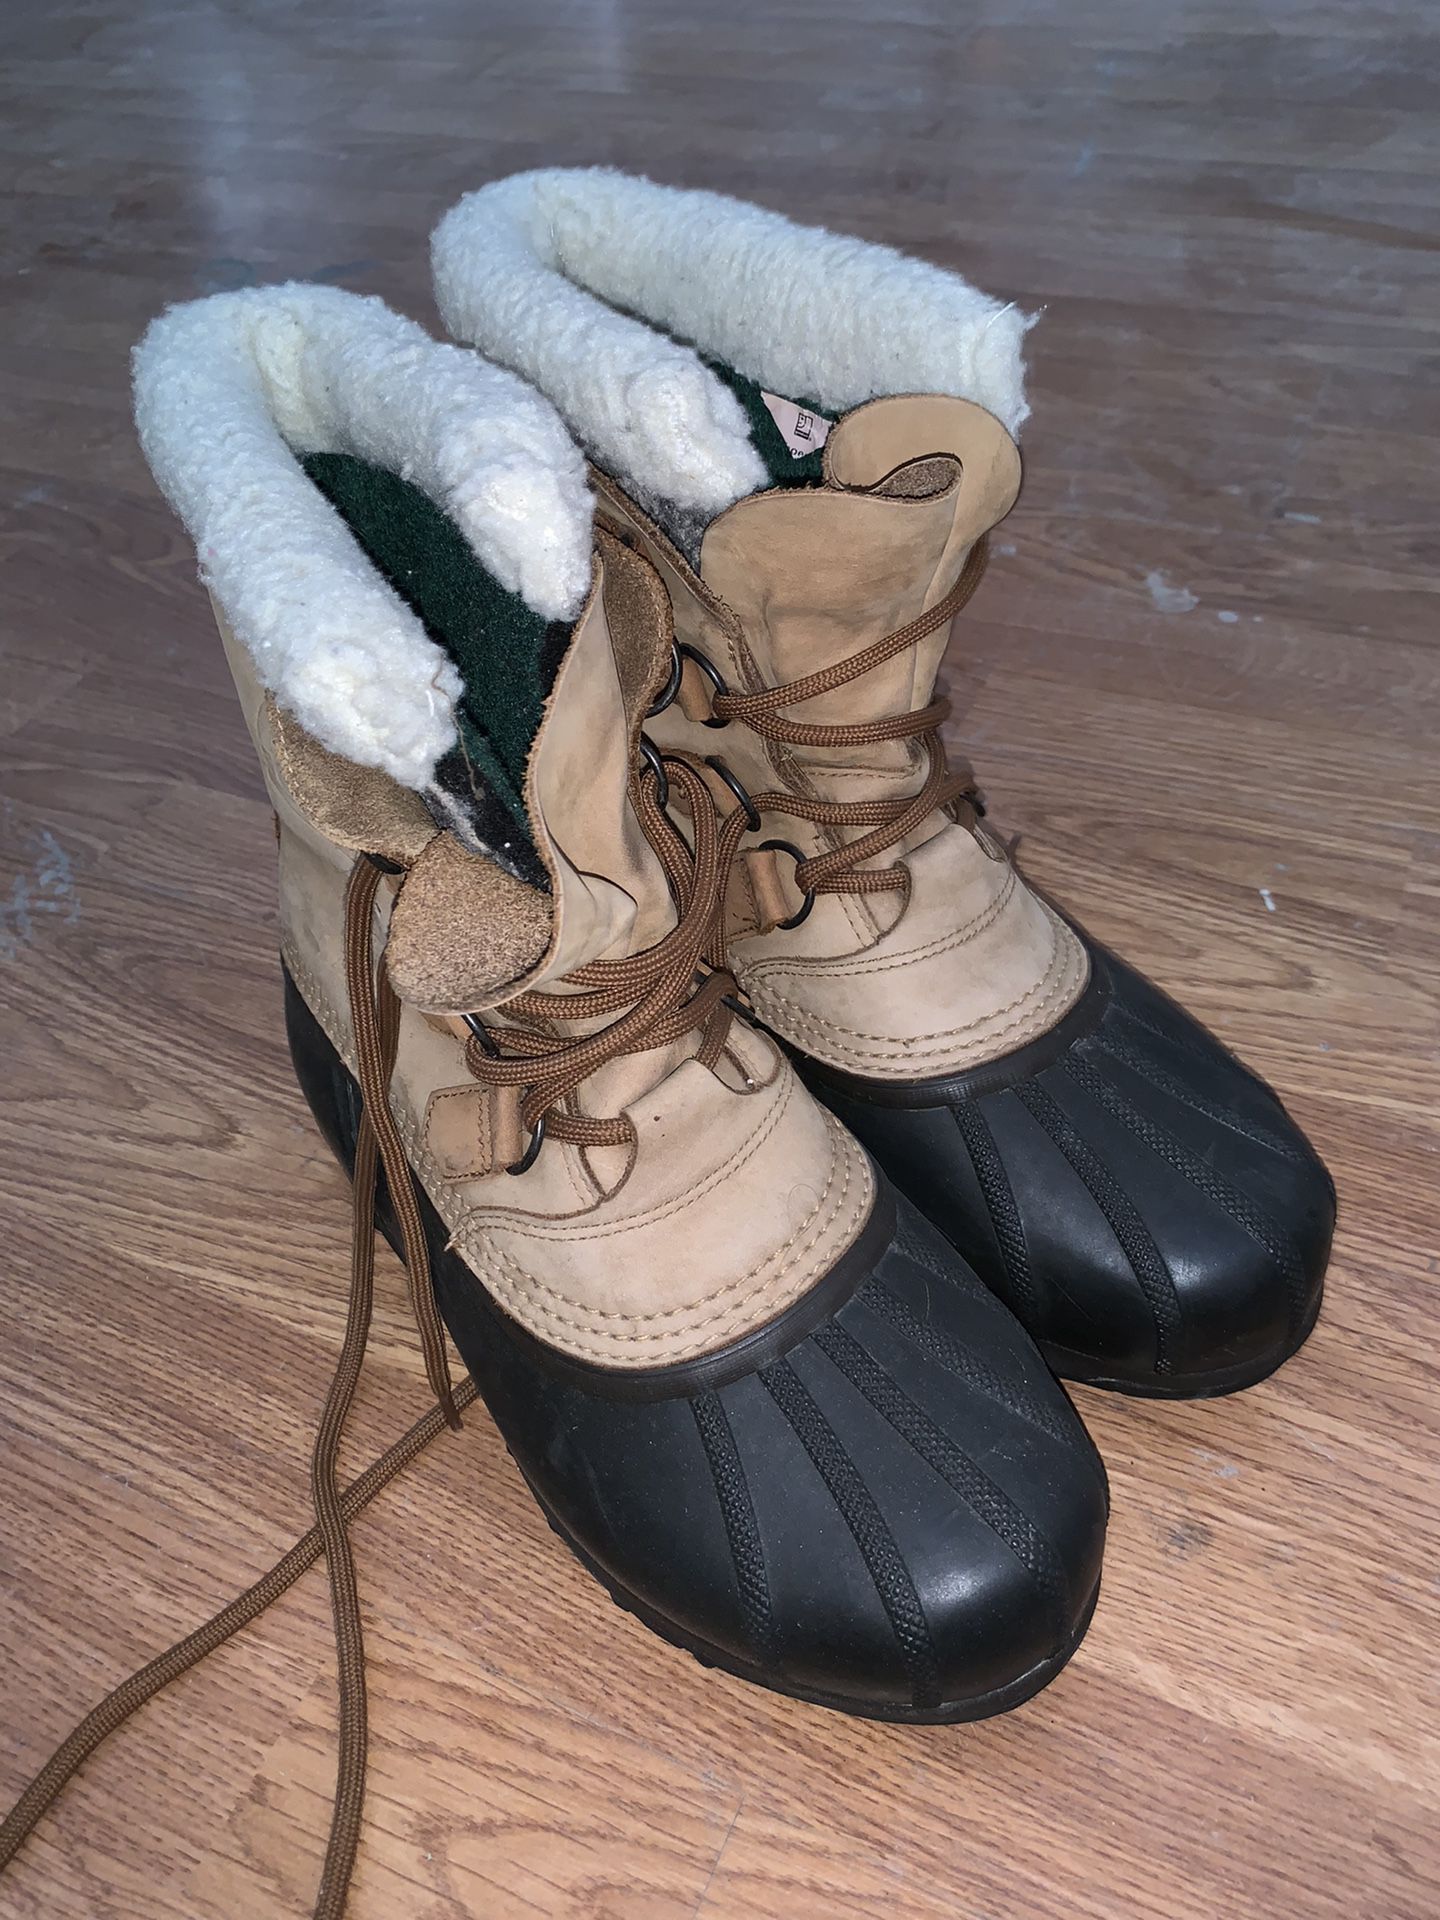  Snow boots